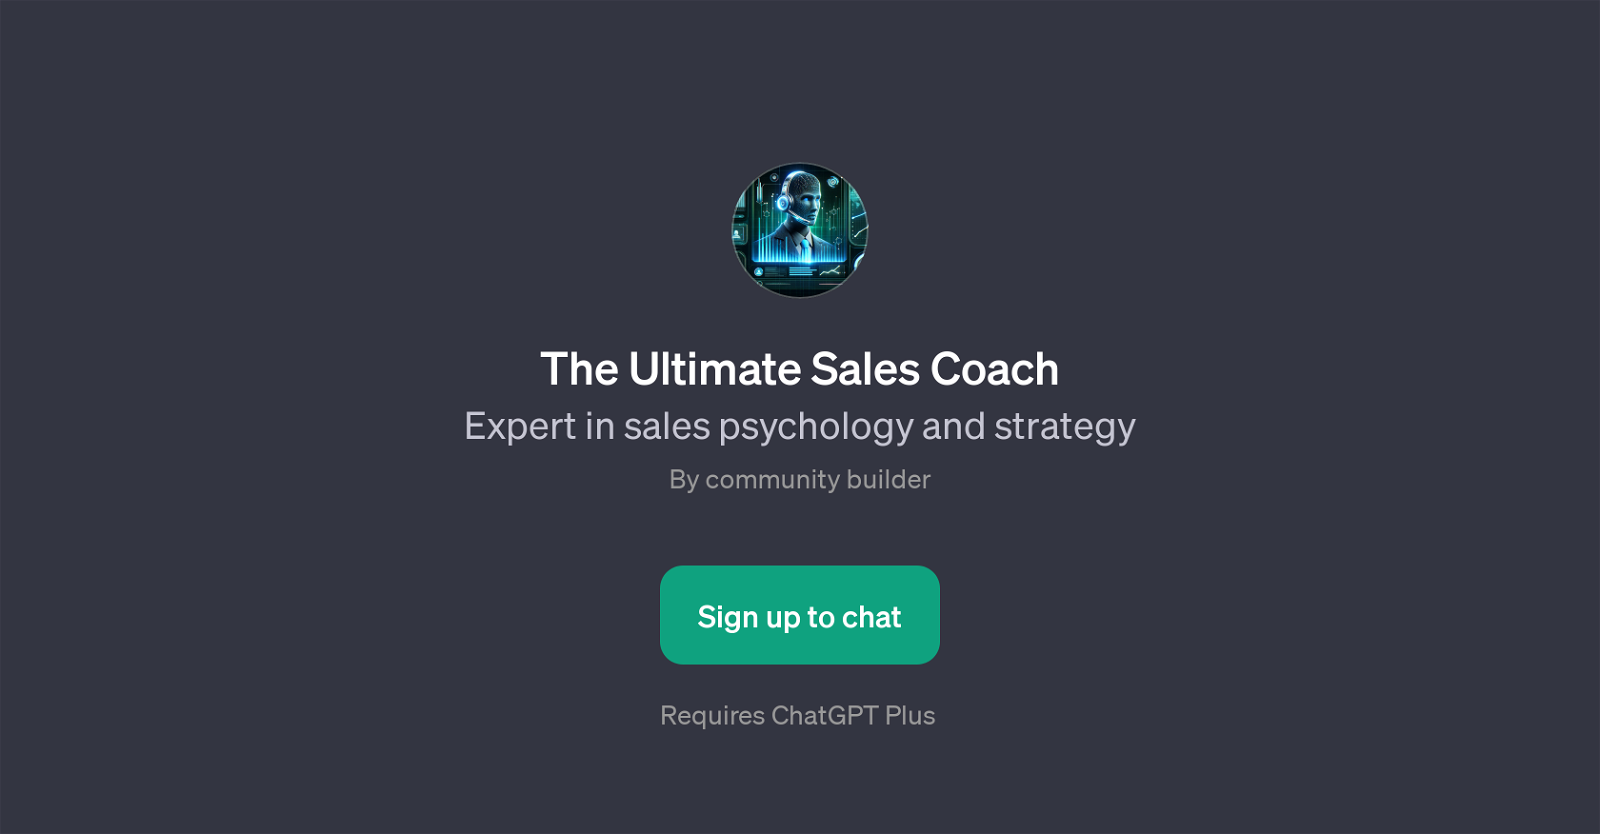 The Ultimate Sales Coach website